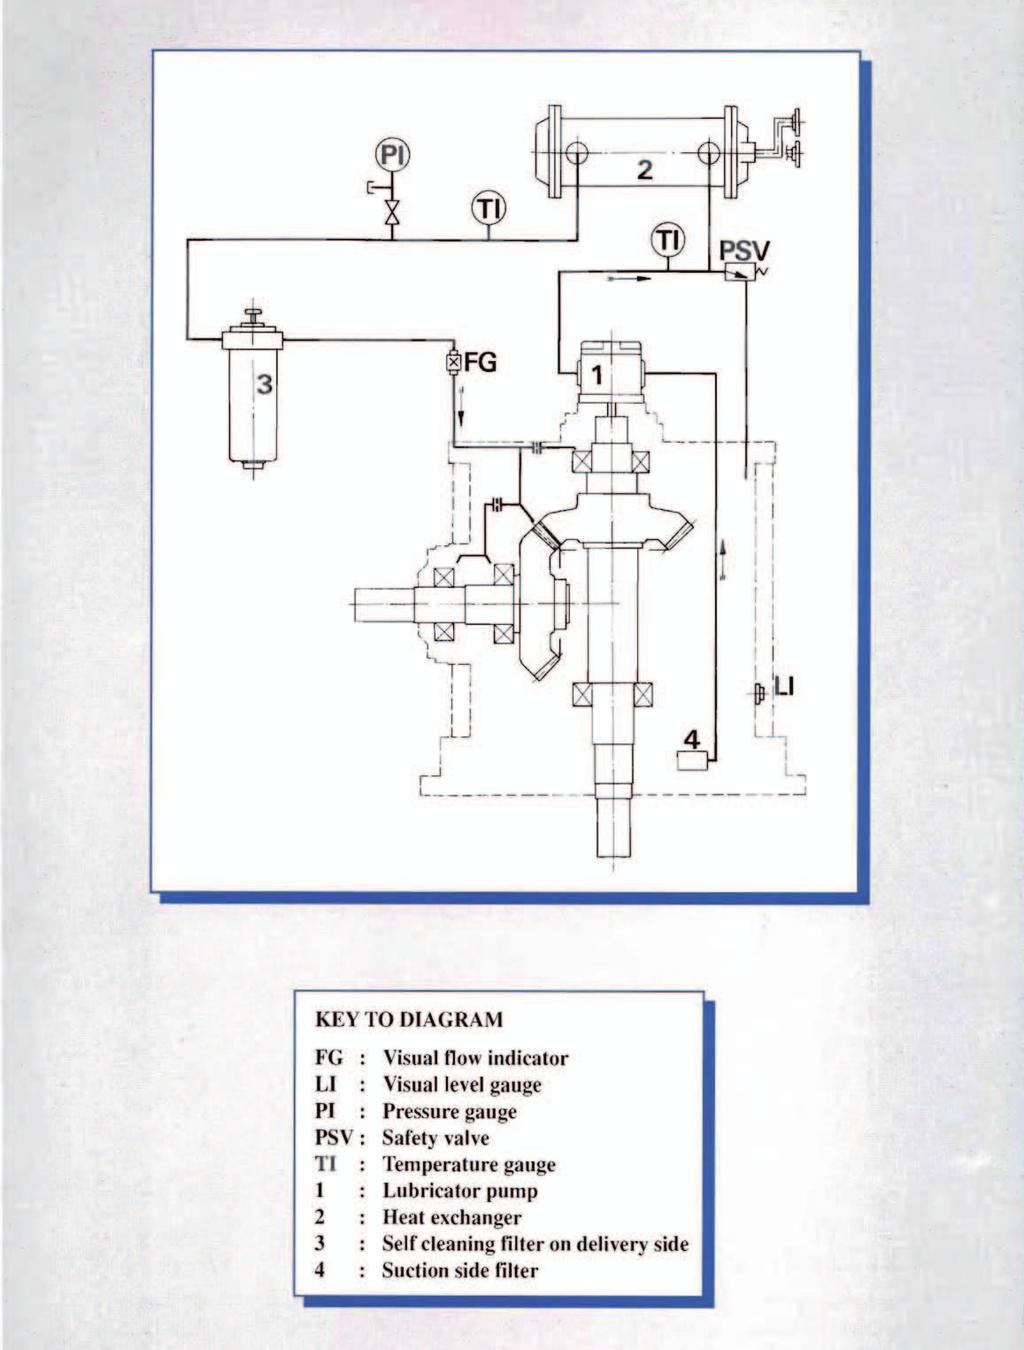 KEY TO DIAGRAM FG Visual flow indicator LI Visual level gauge PI Pressure gauge PSV Safety valve TI